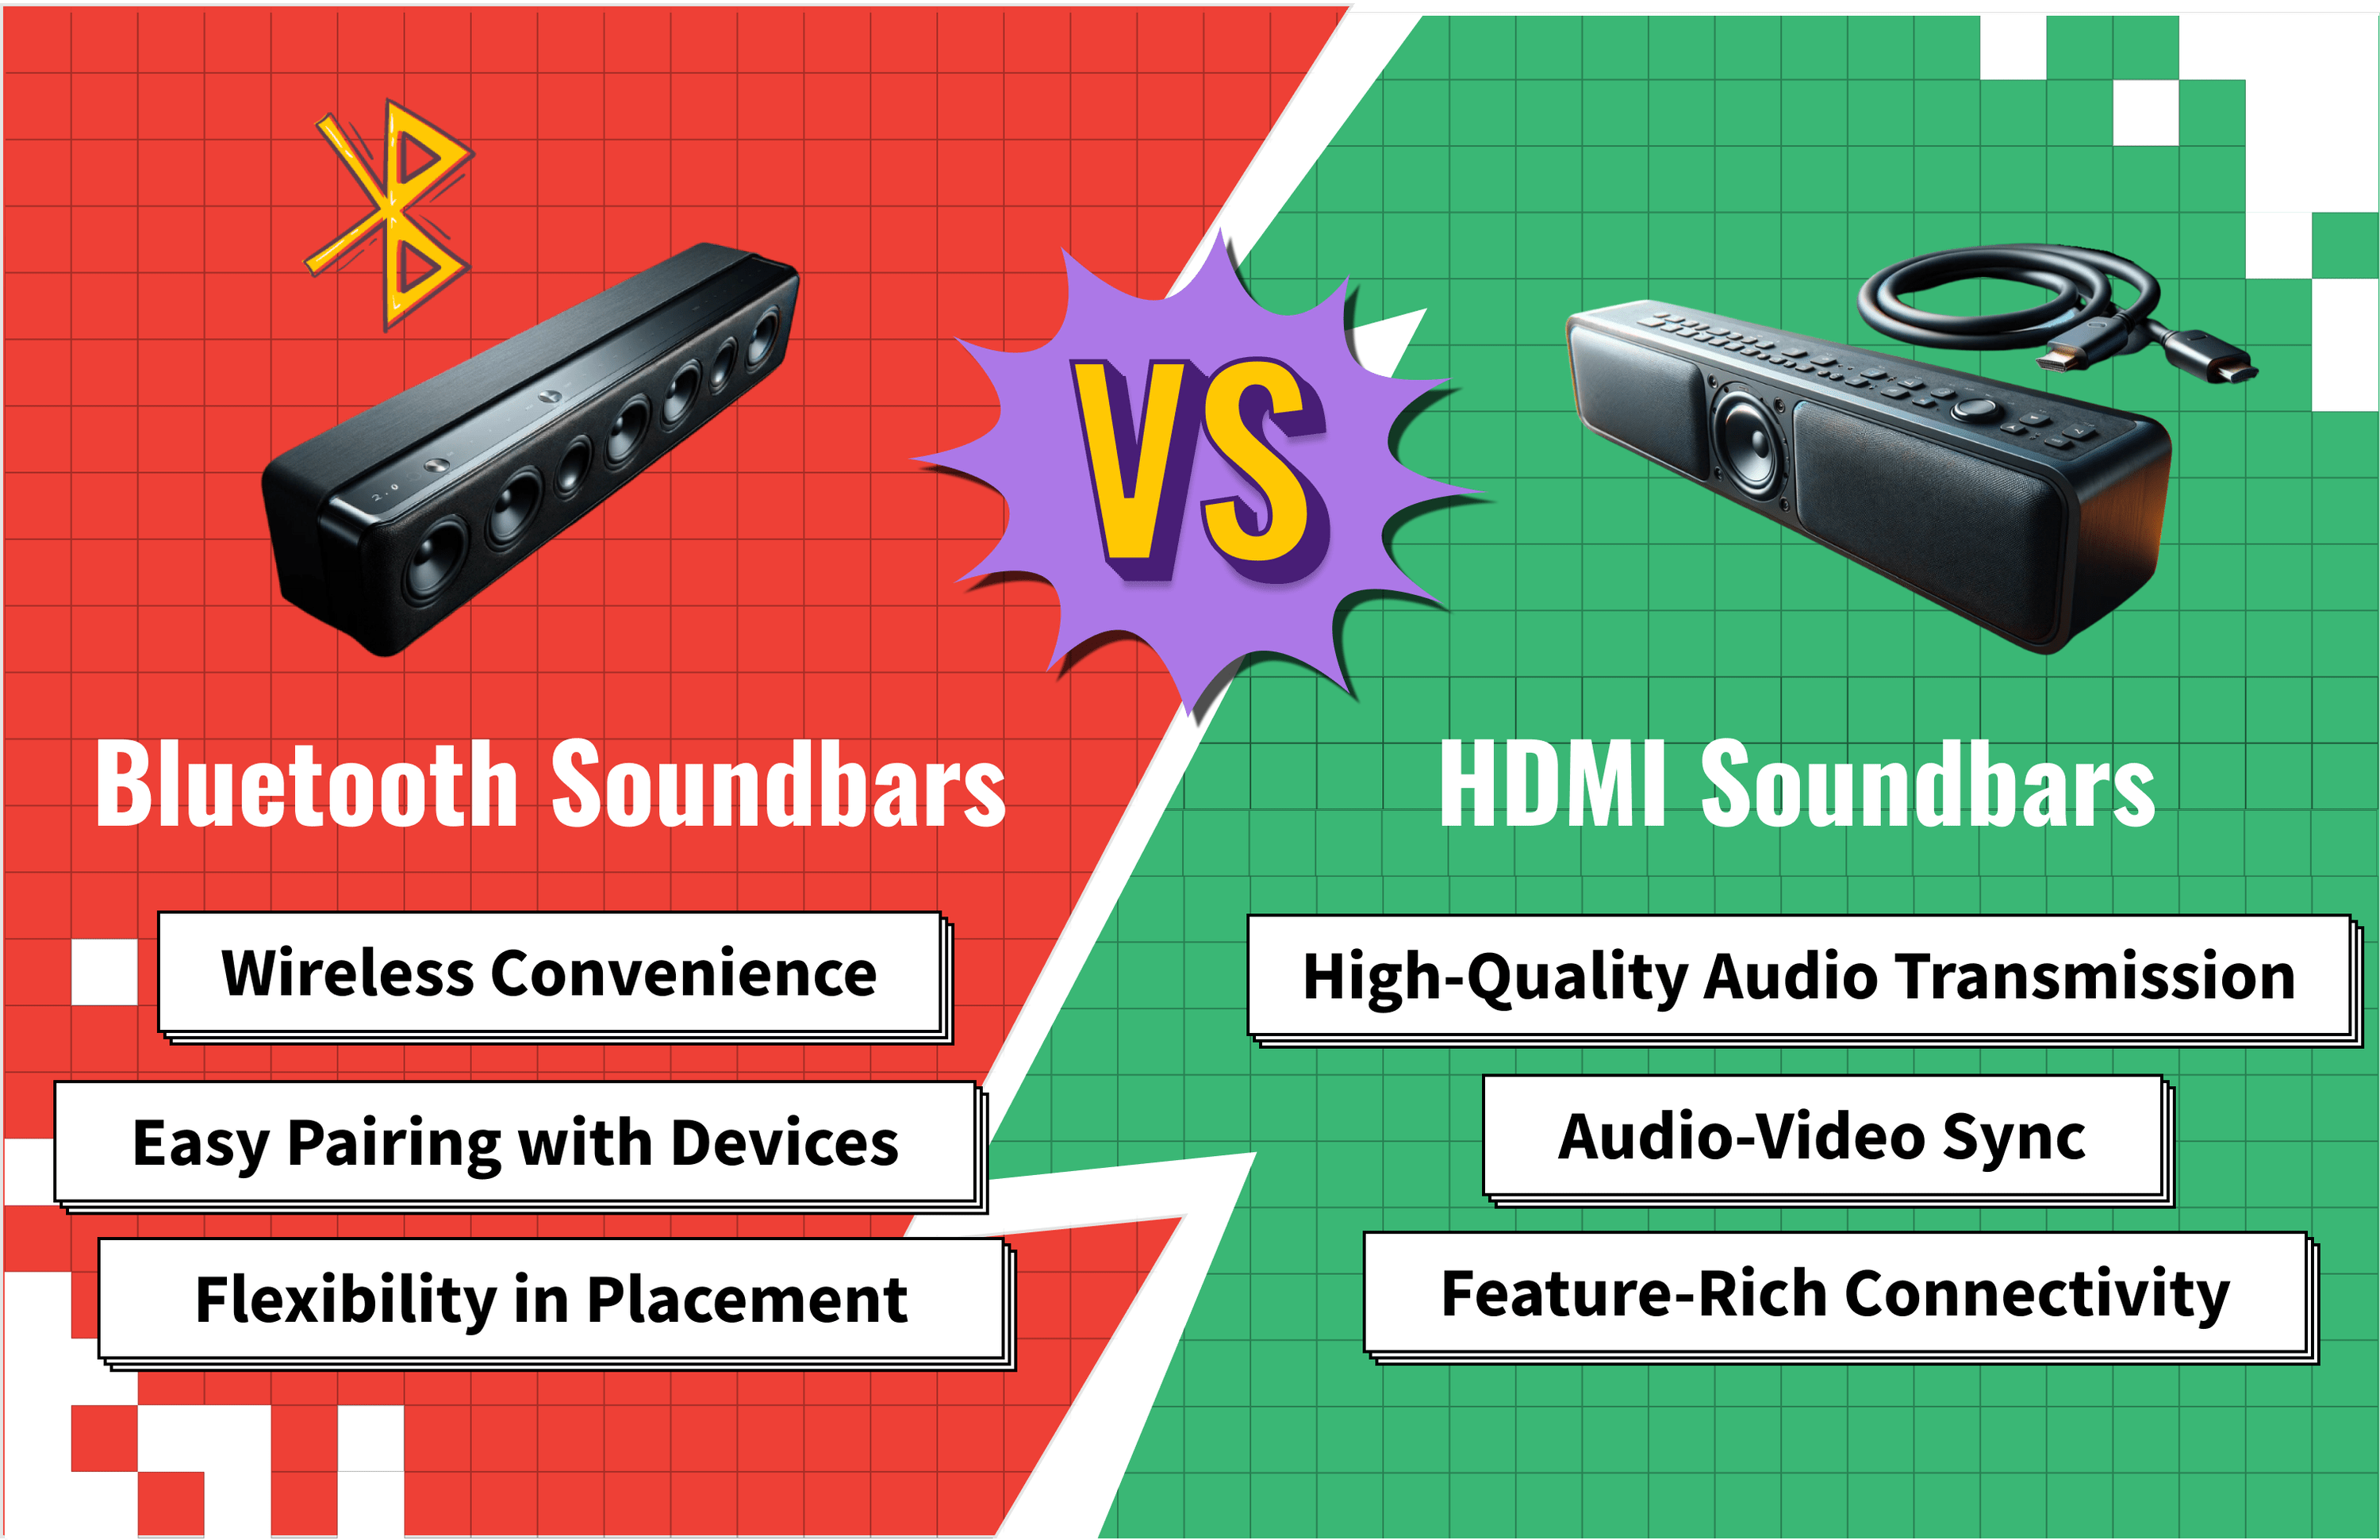 HDMI vs Bluetooth for a Soundbar